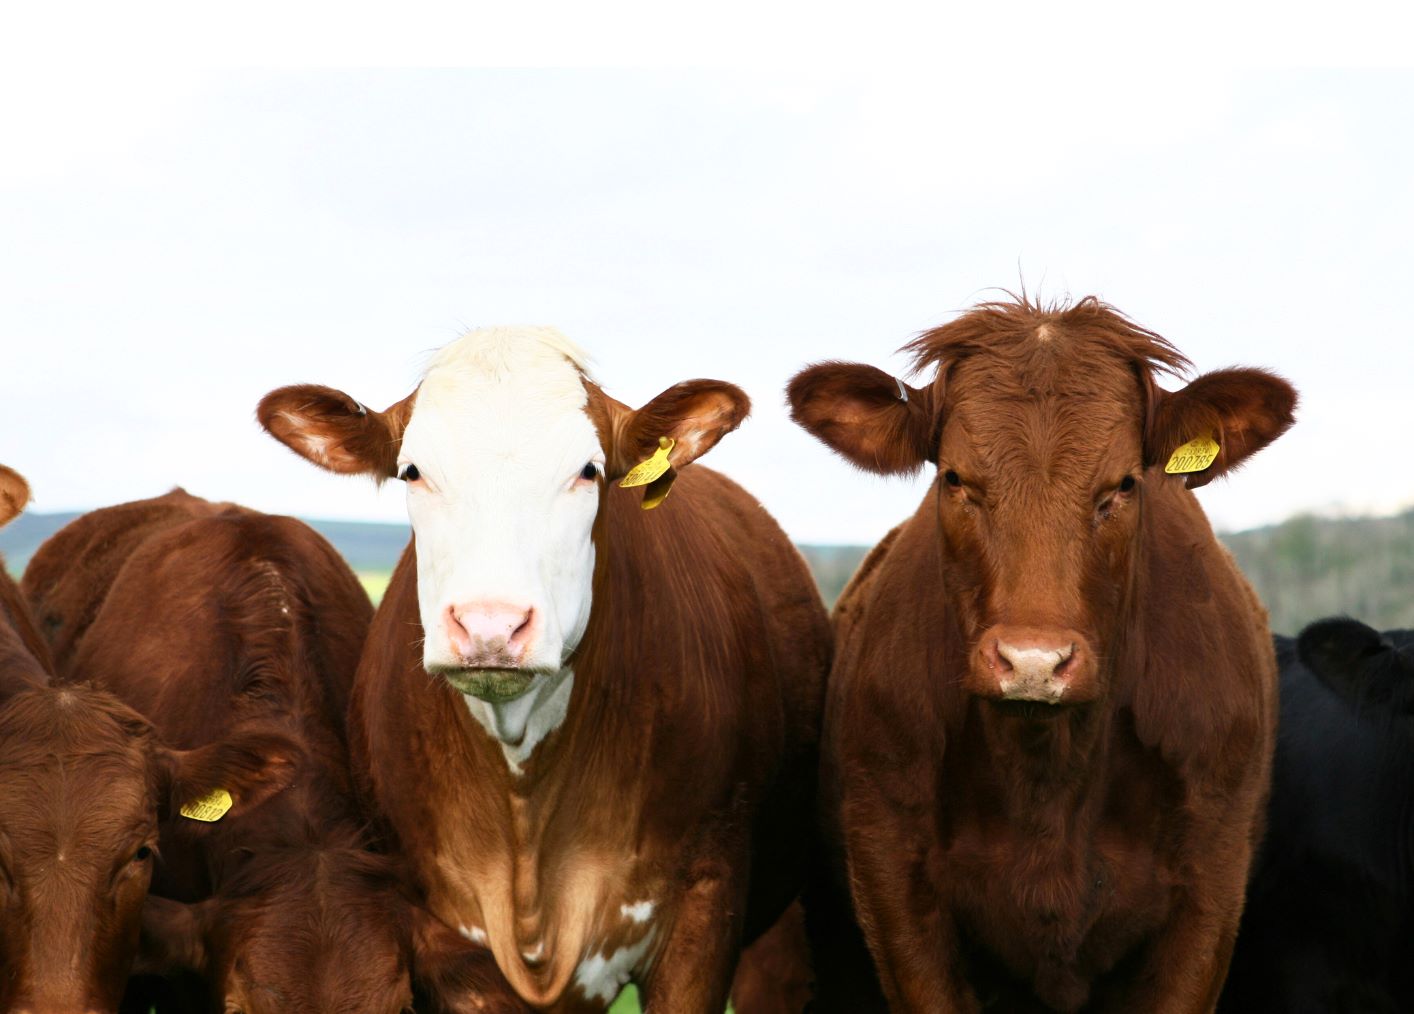 brown cows wearing ear tags